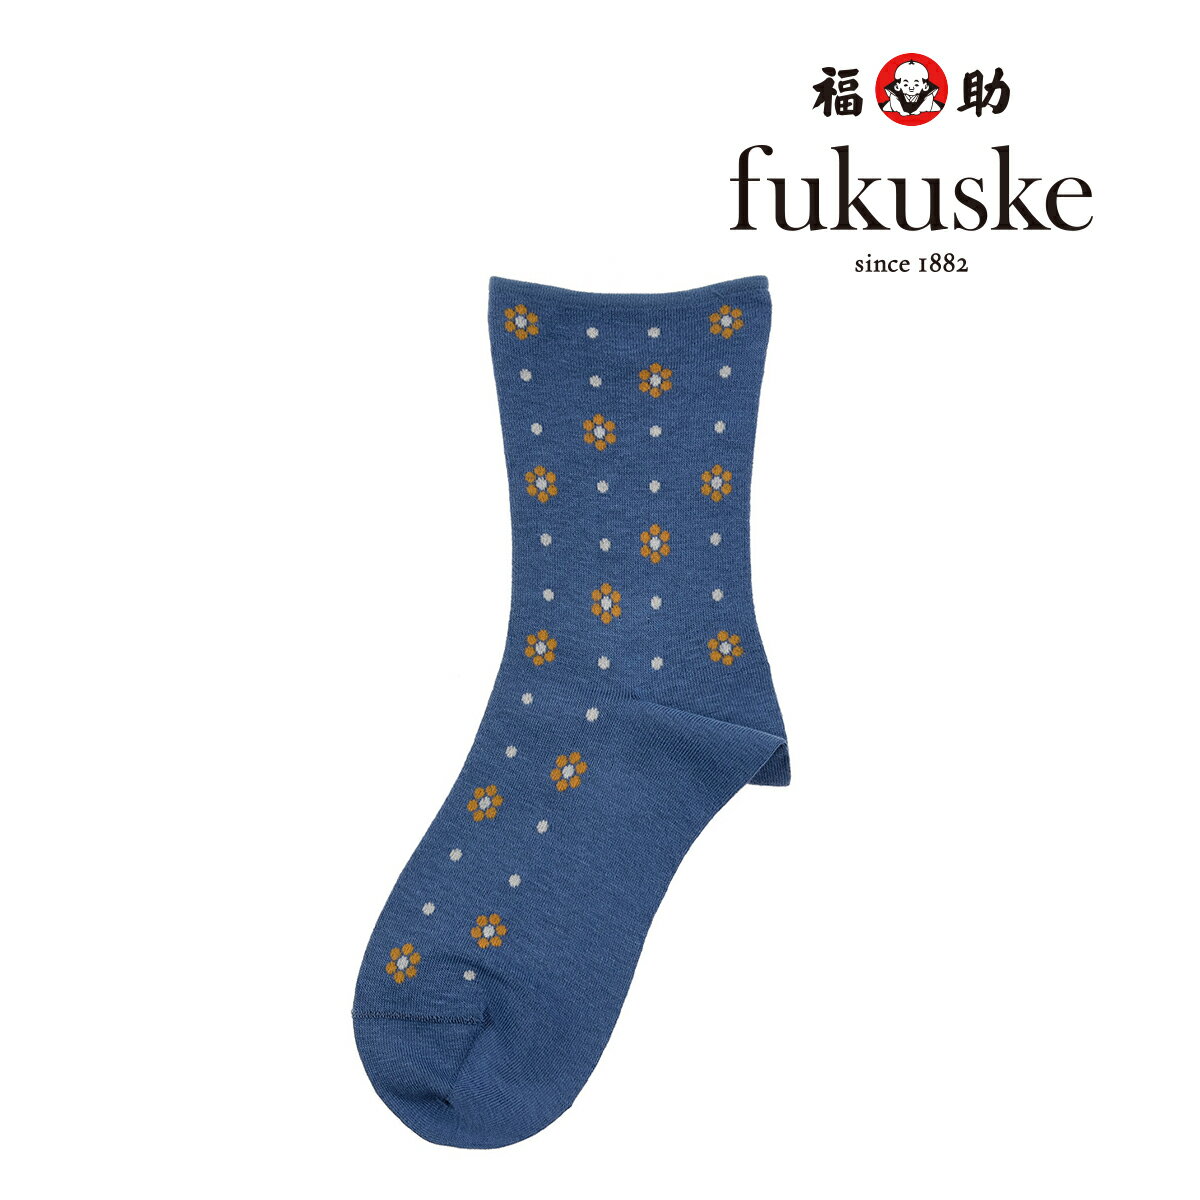 C fB[X fukuske (tNXP) the spirit of mottainai }`Xgb` ԕ N[ 3163-842wl  tNXP fukuske 